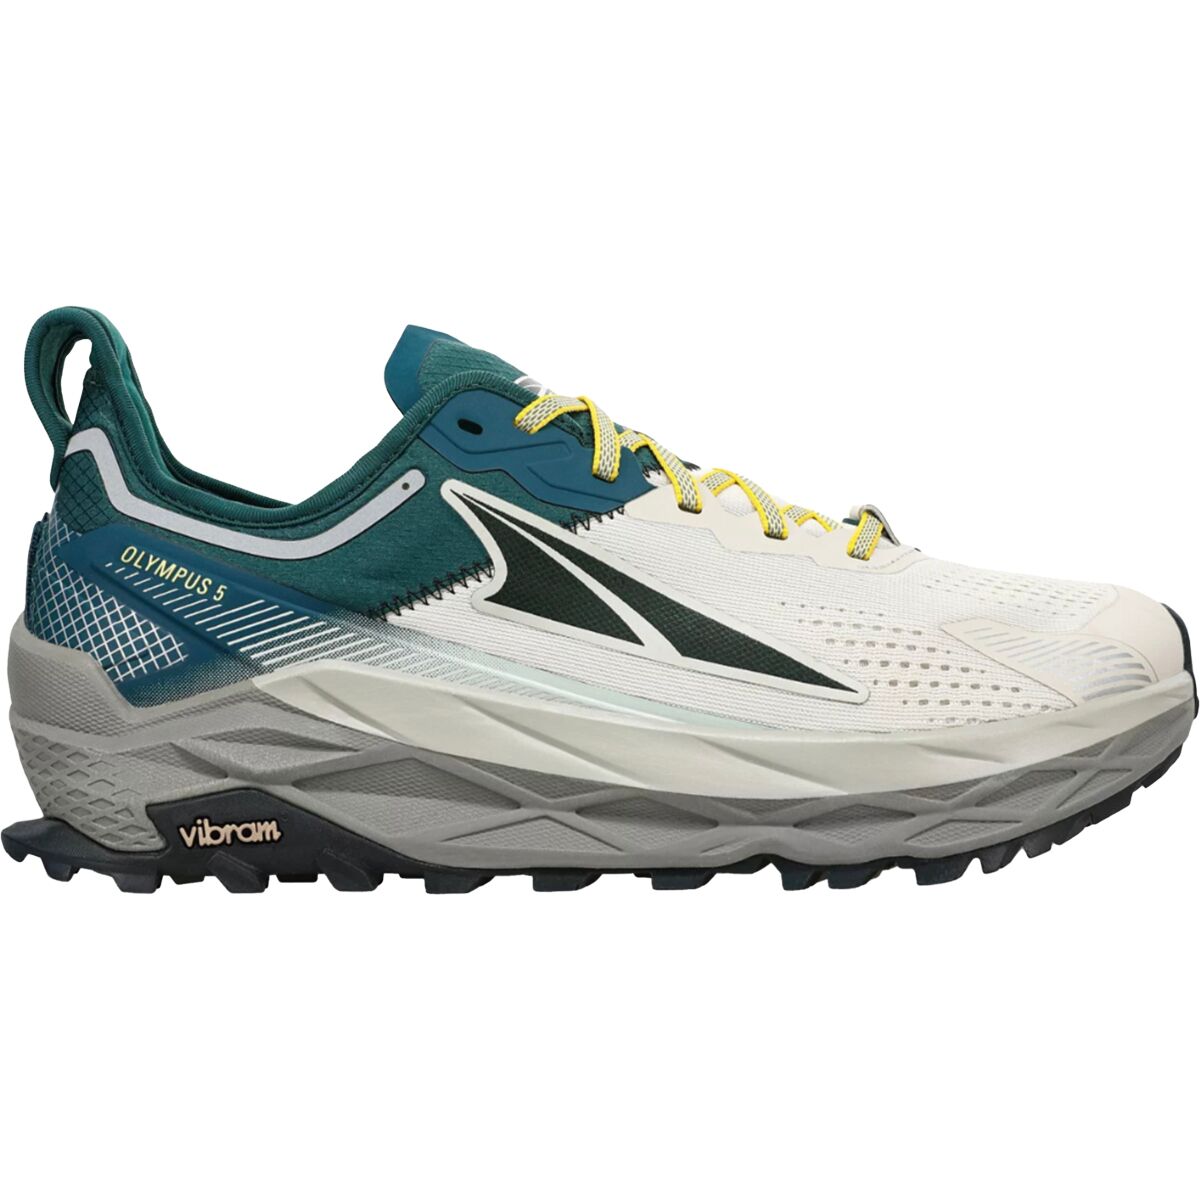 Olympus 5.0 Trail Running Shoe - Men